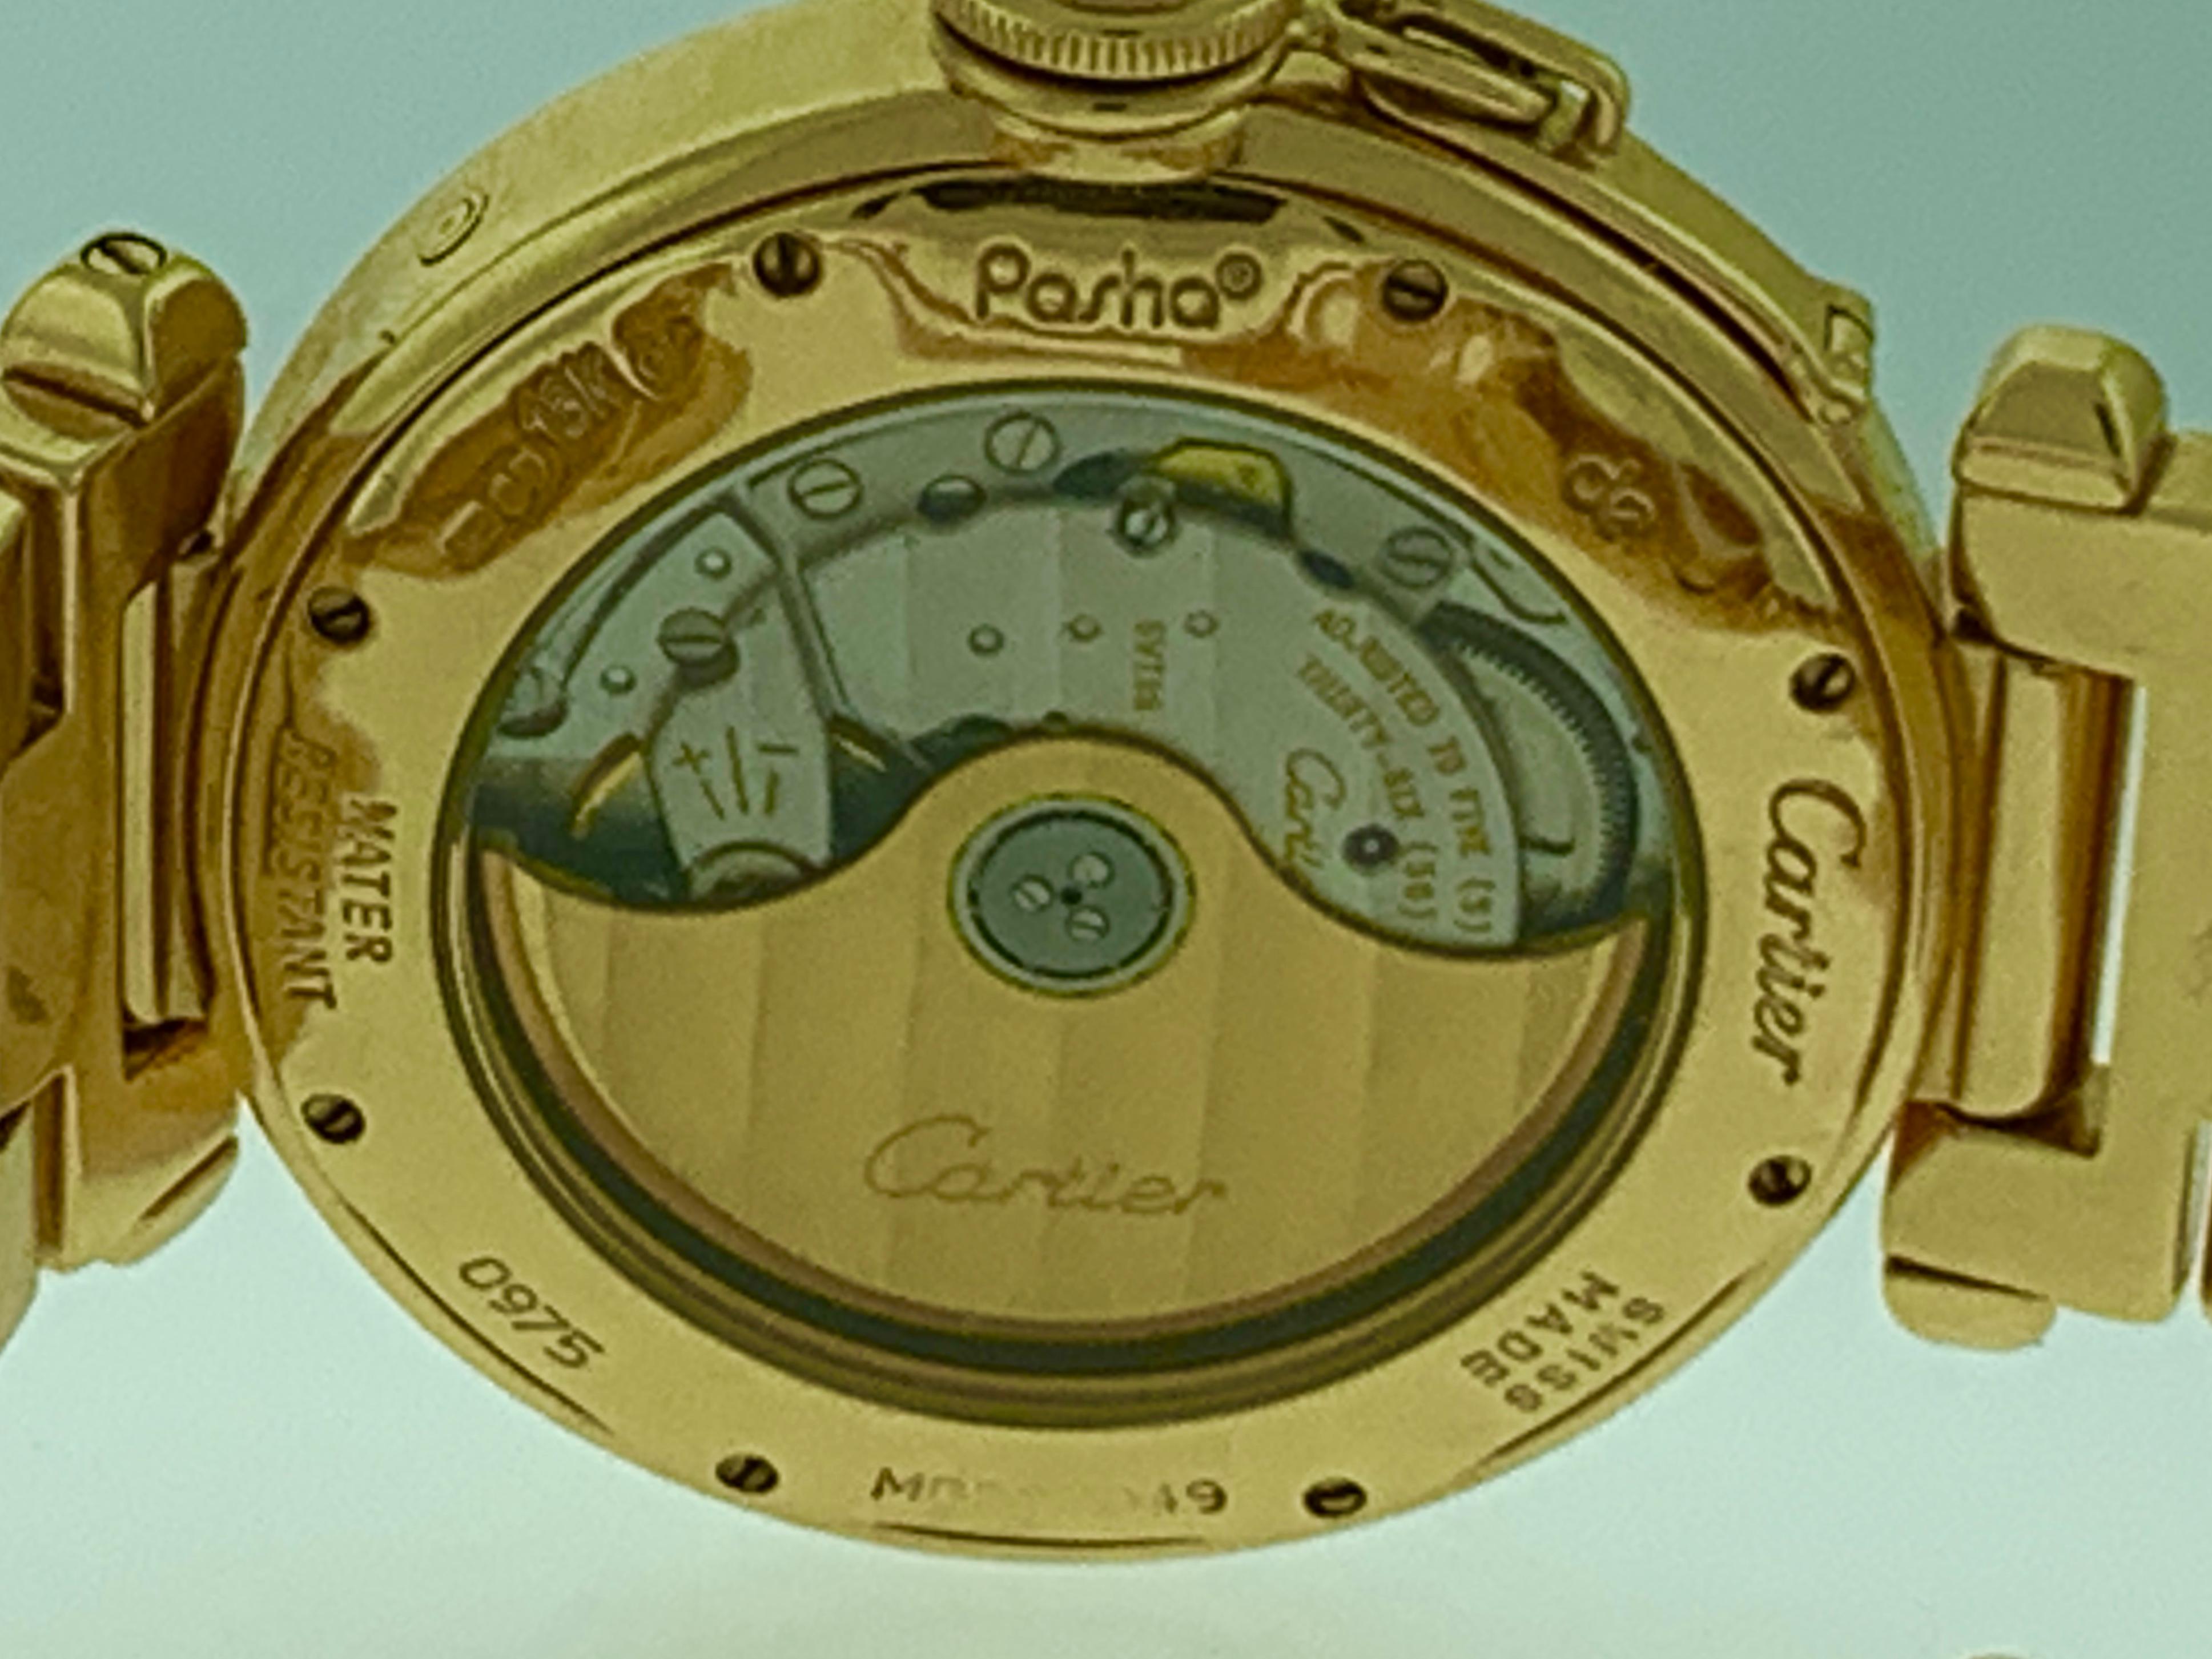 151 Gm 18 Karat Gold Cartier Pasha Factory Diamond Automatic Chrono Watch 3